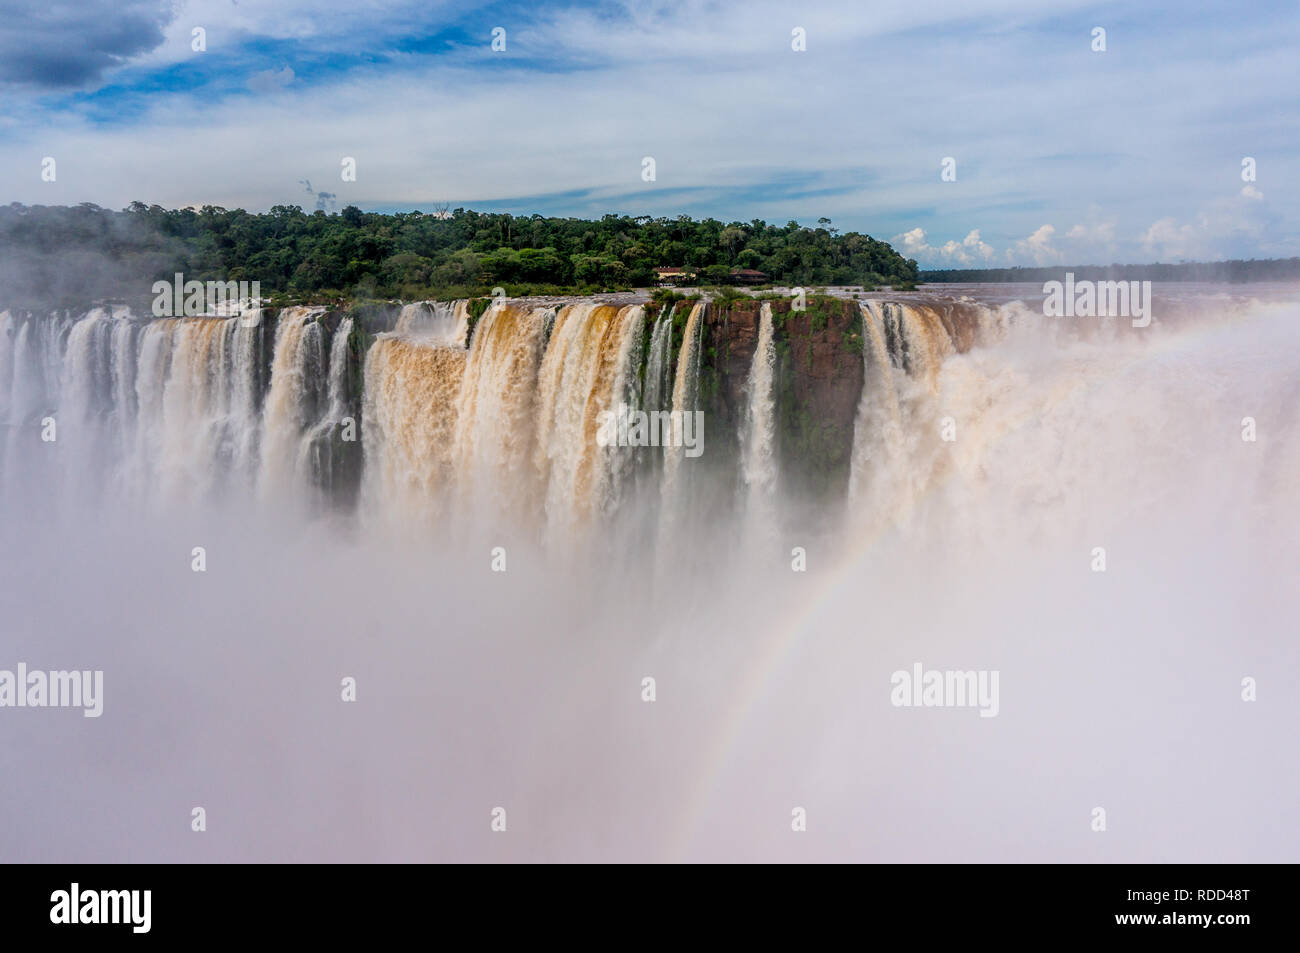 Garganta del Diablo (Devil's Throat), Iguazu Falls, view towards Brazil side Stock Photo